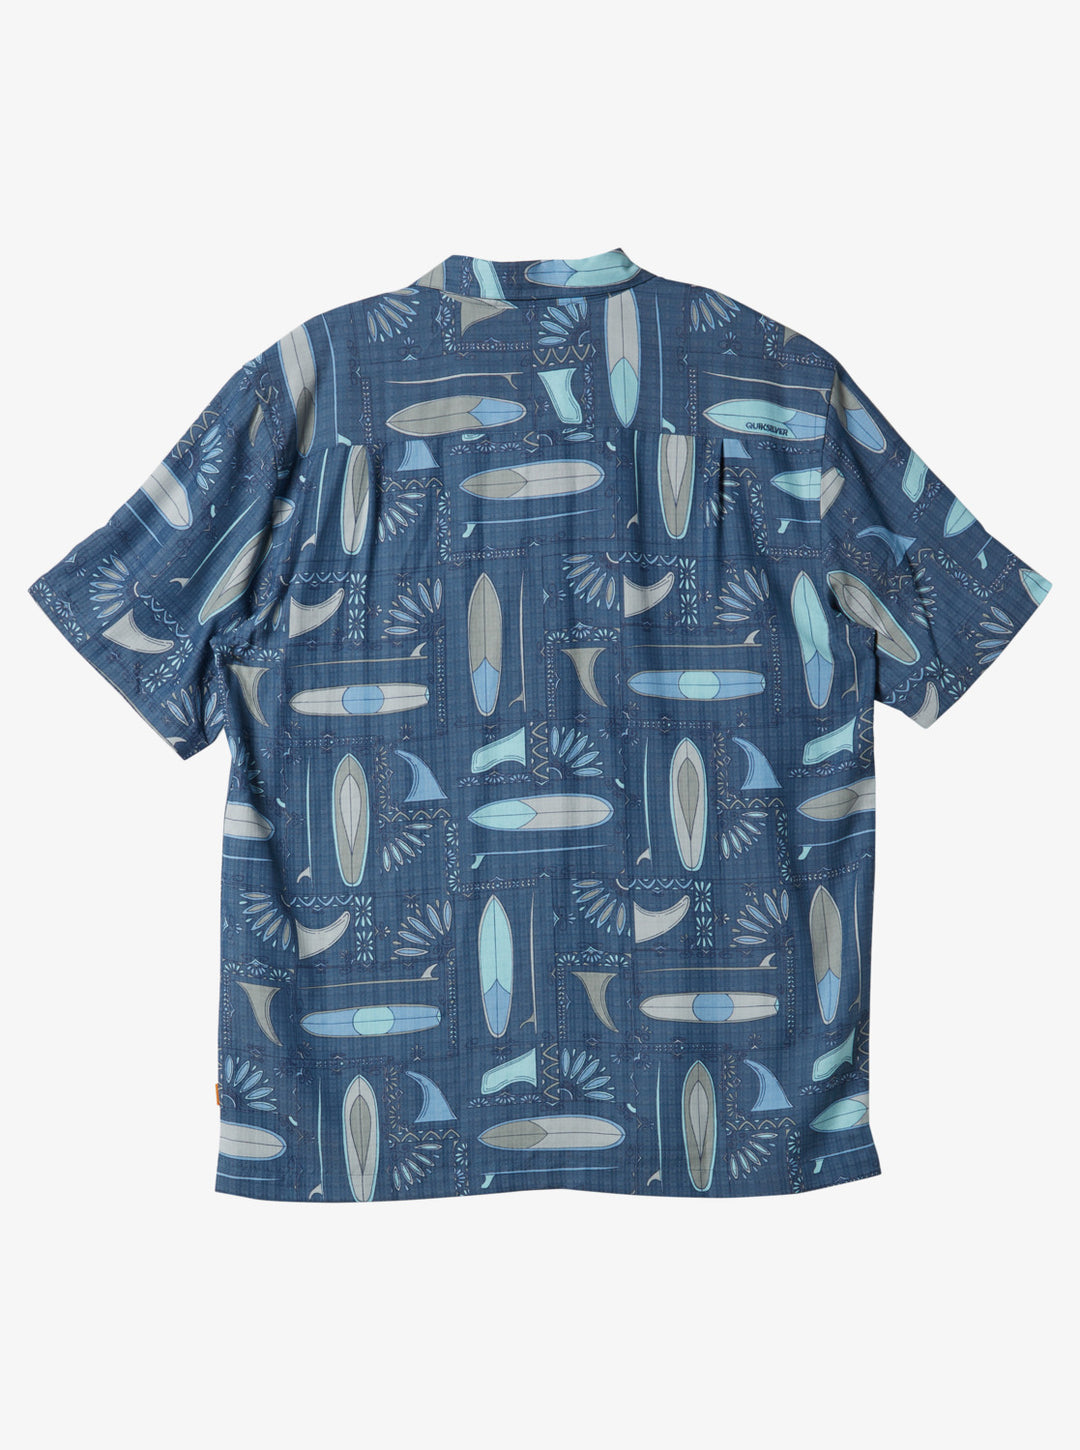 Quiksilver Waterman Long Boards Woven Shirt - Ensign Blue - Sun Diego Boardshop